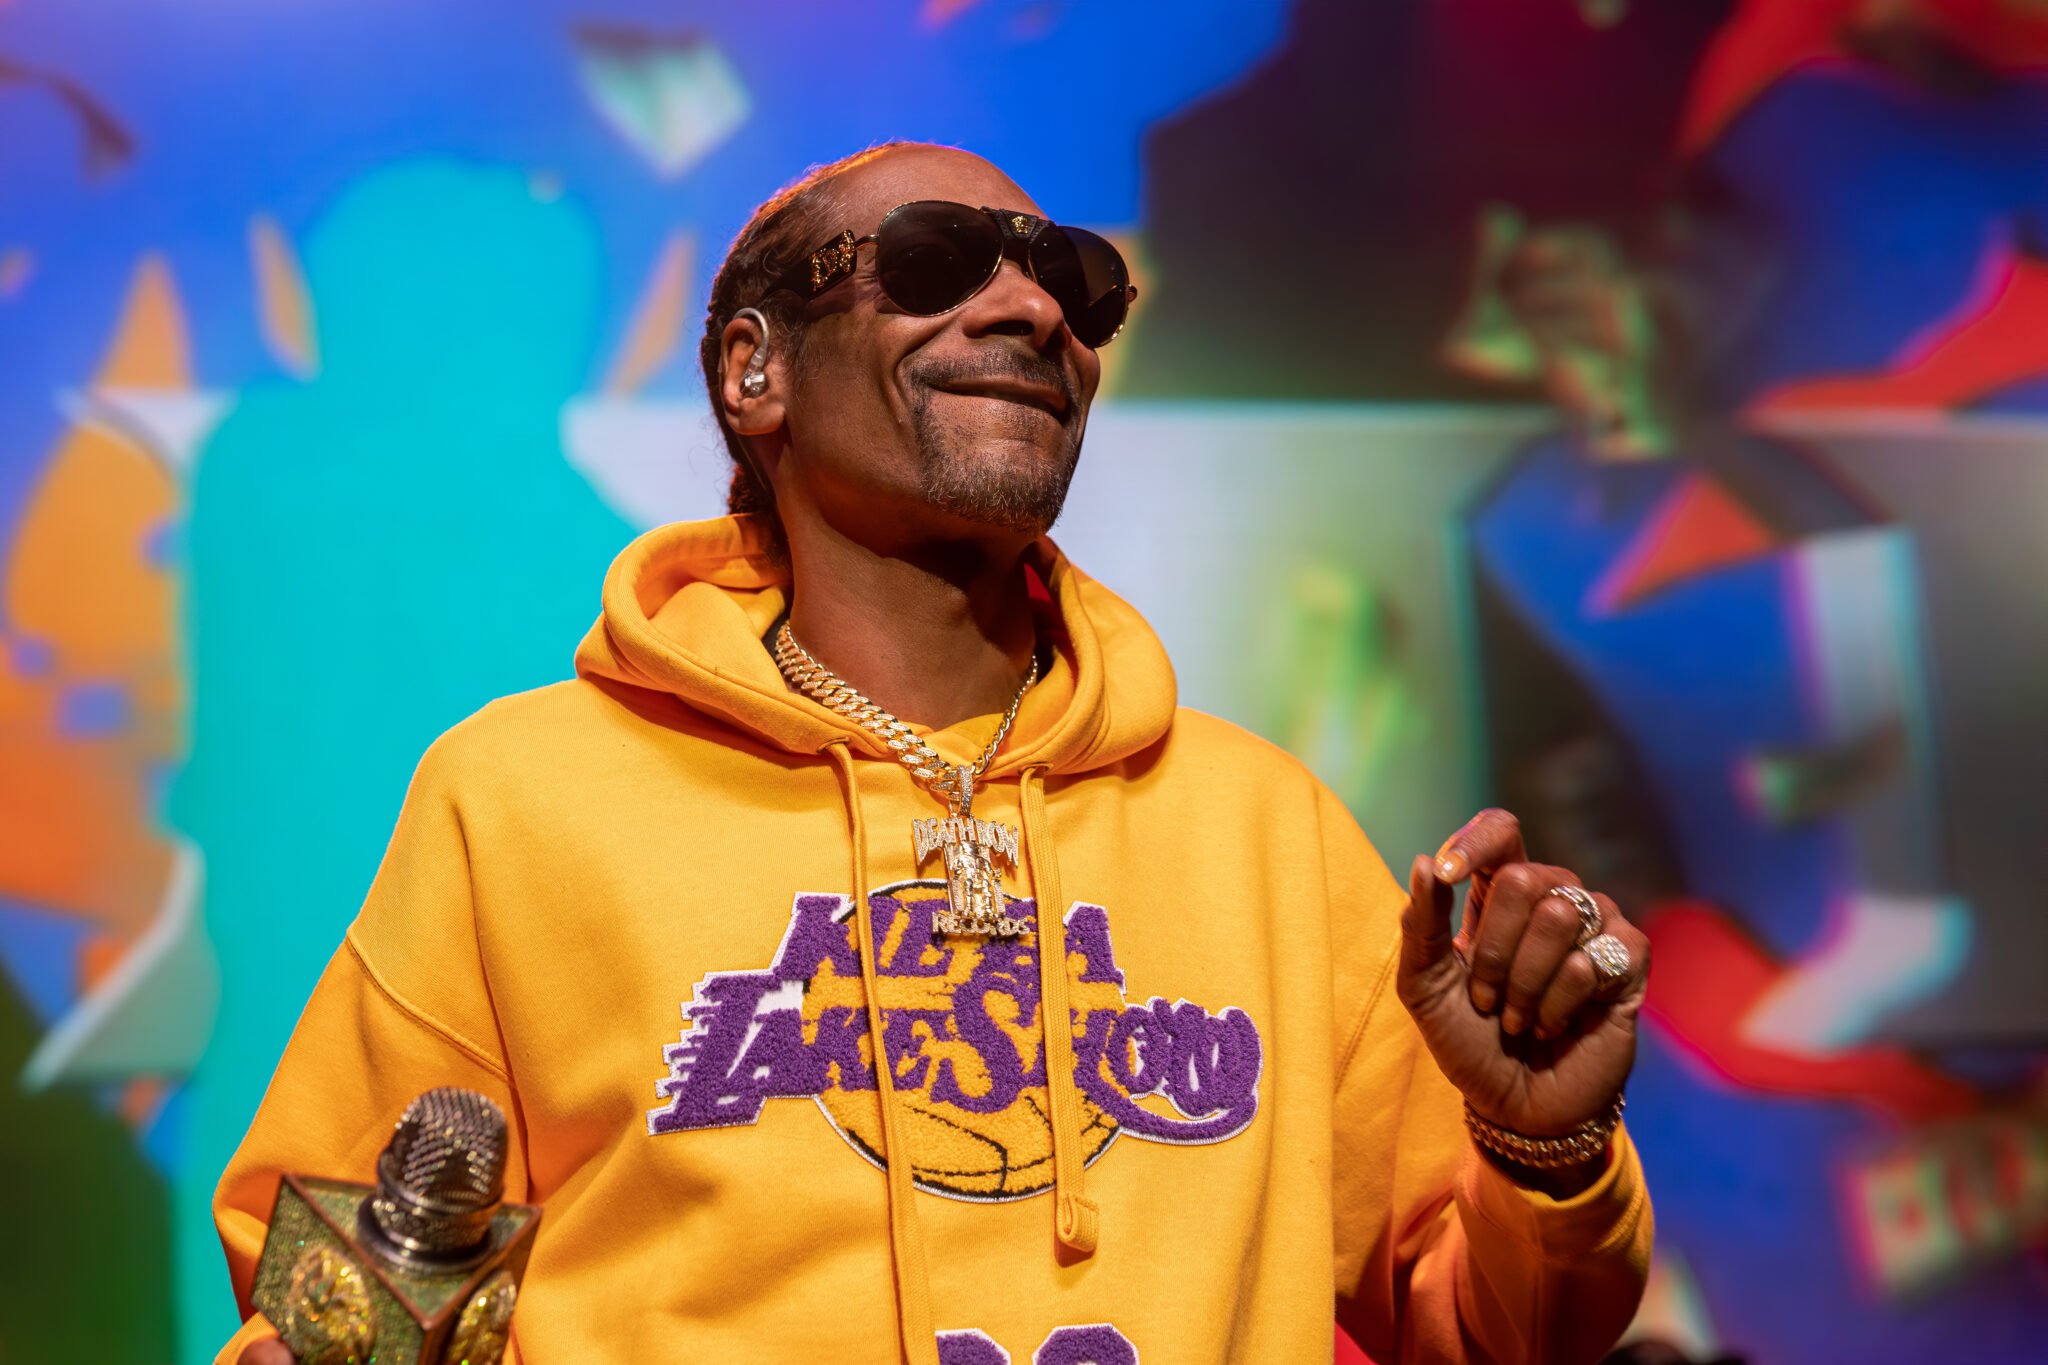 Detroit, Michigan / USA - 01-26-2020: Snoop Dogg performing live at the Fillmore of Detroit